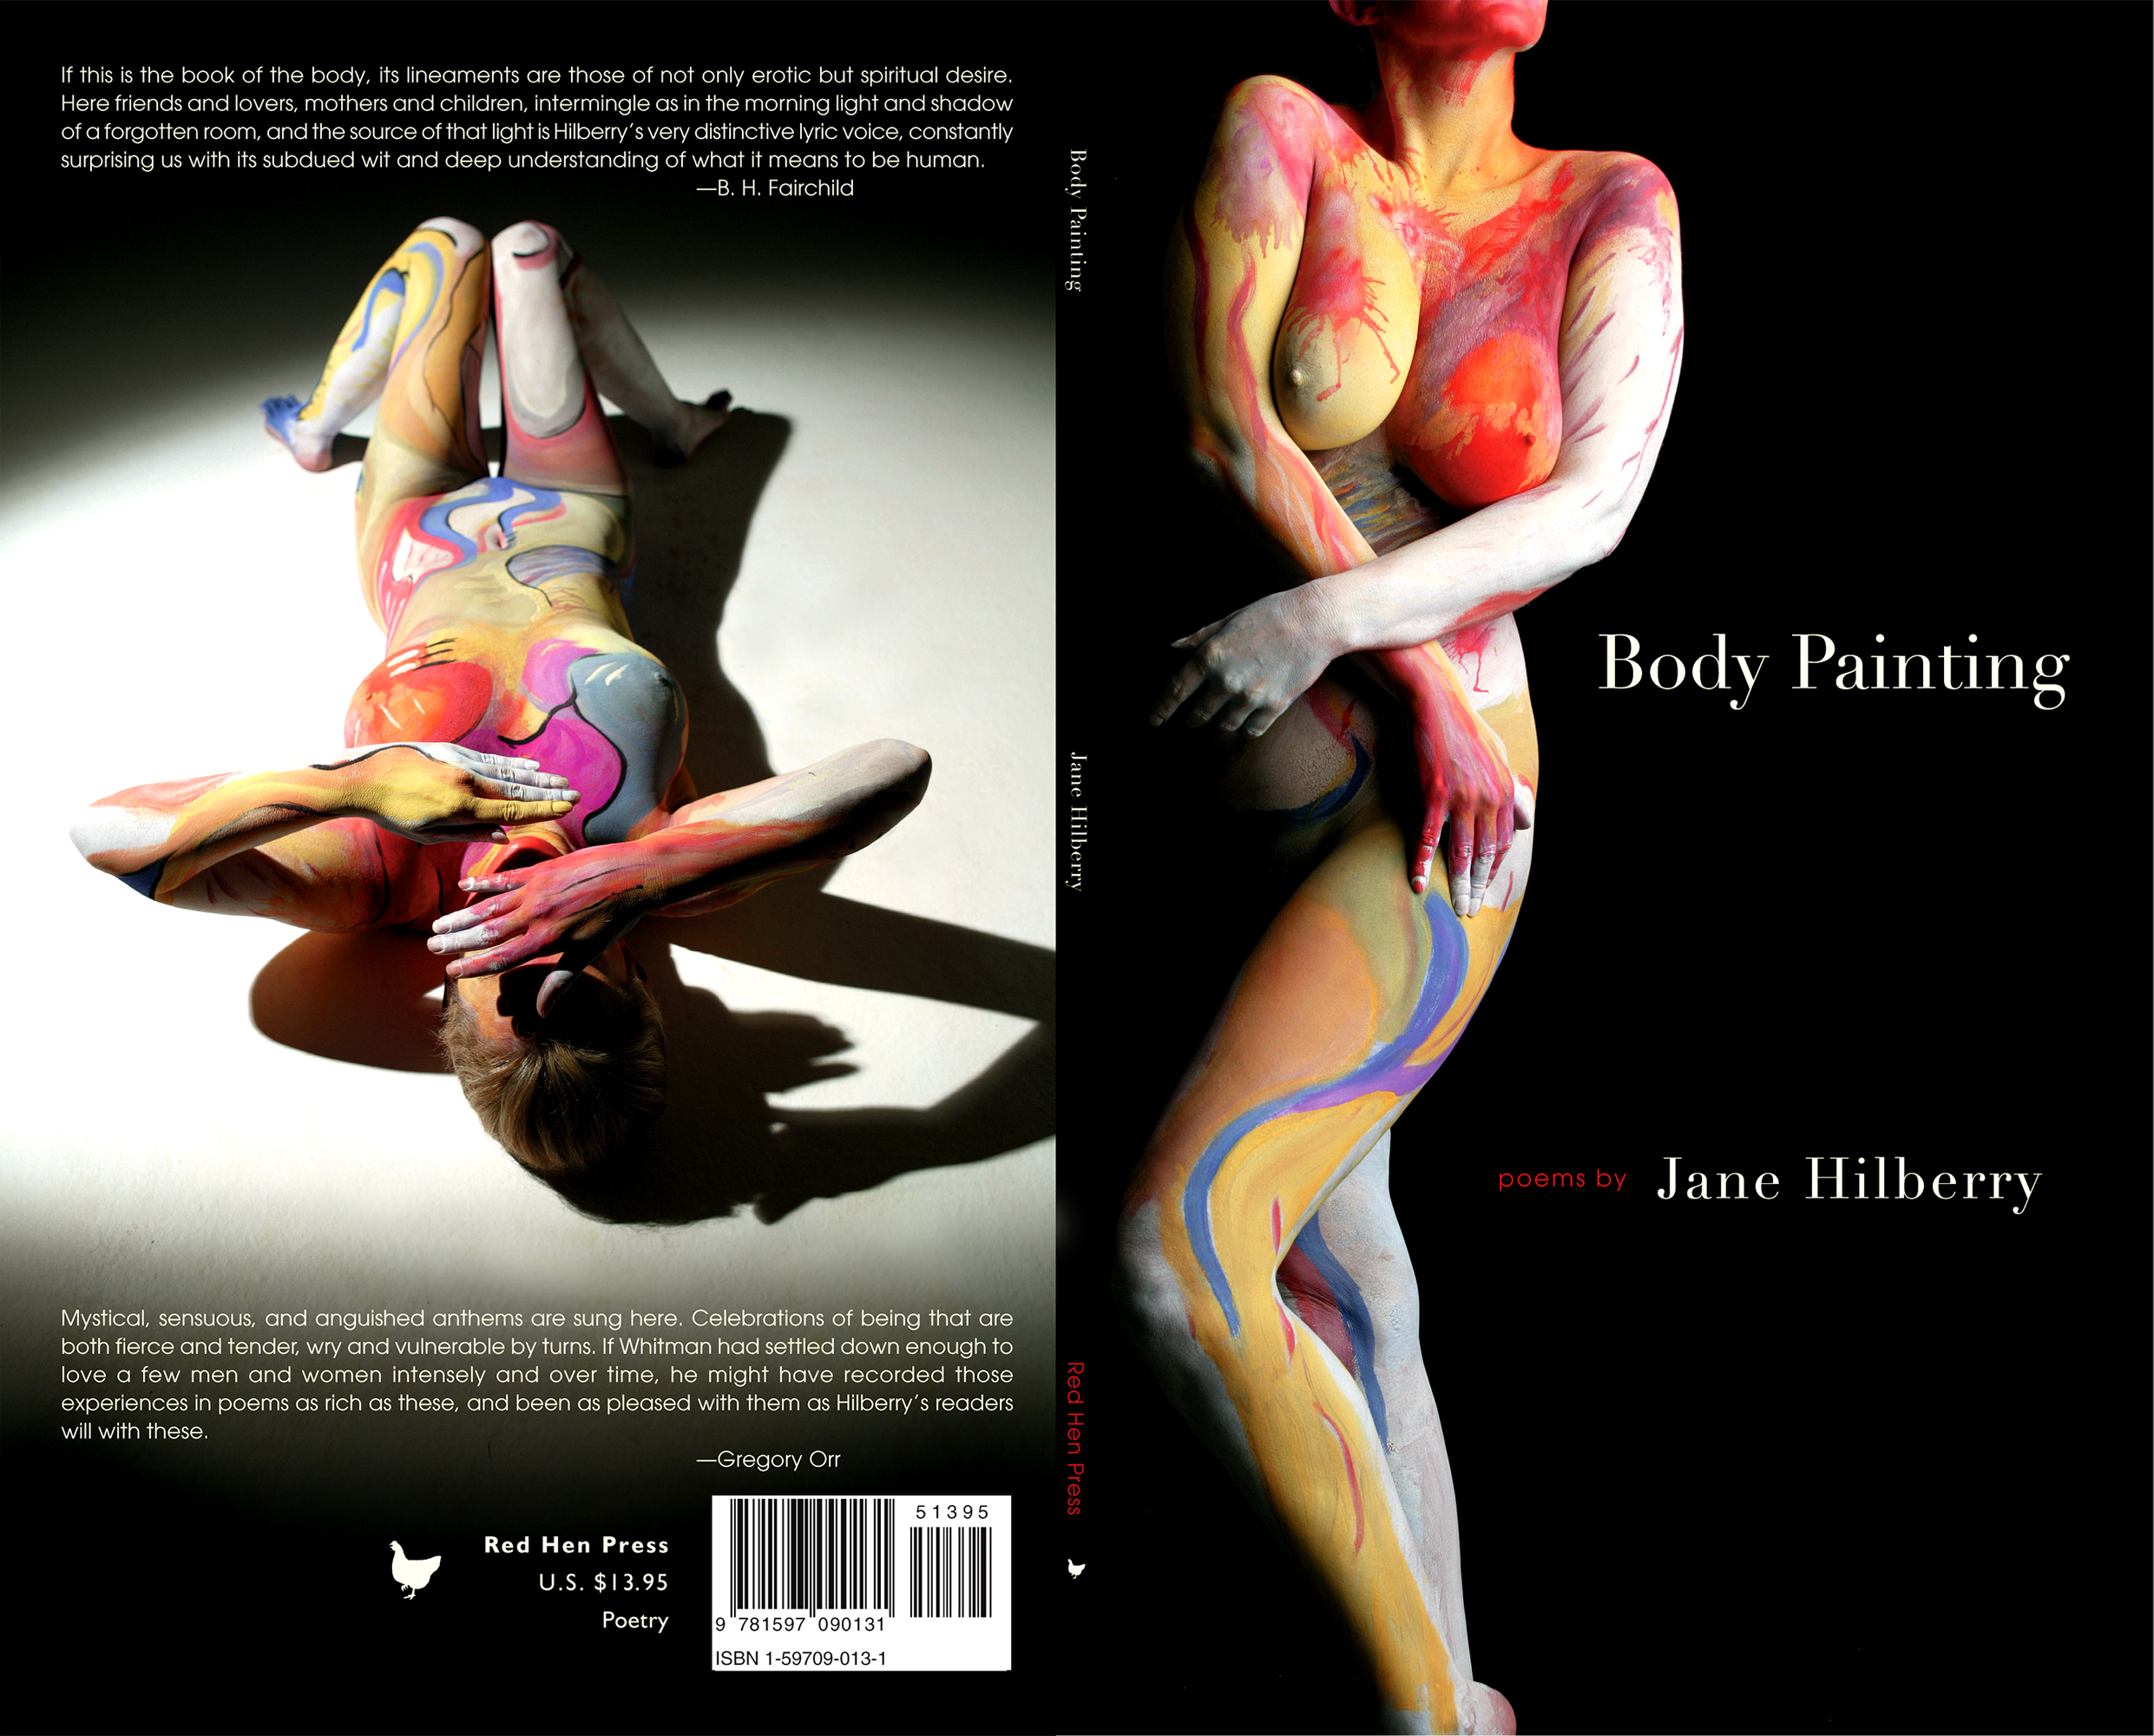 Body paint